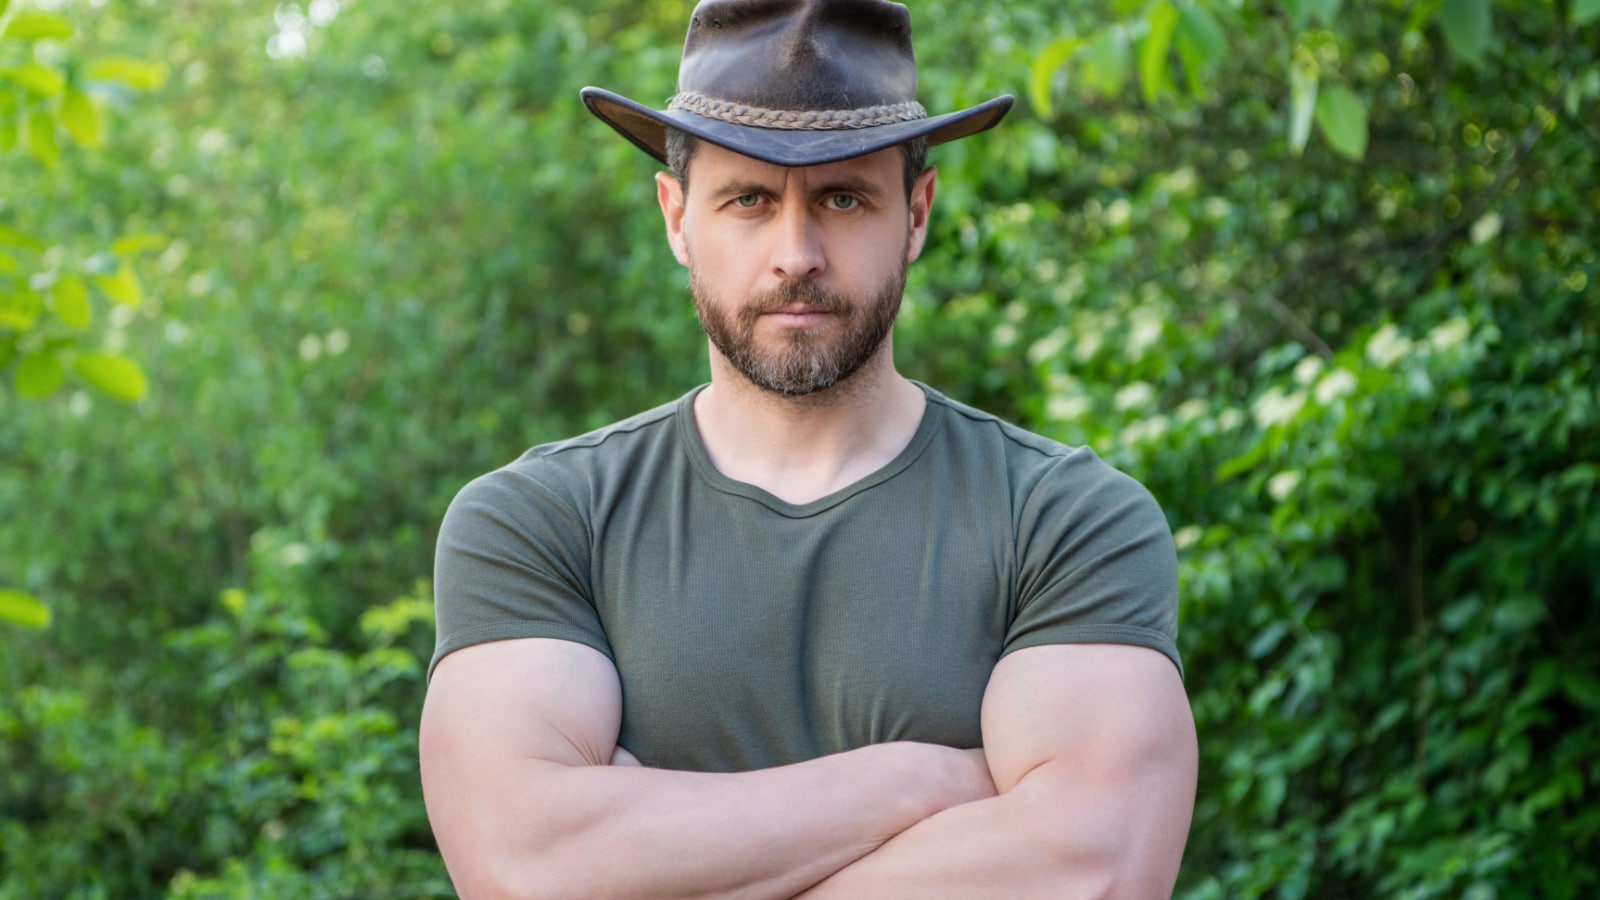 macho man muscles cowboy hat